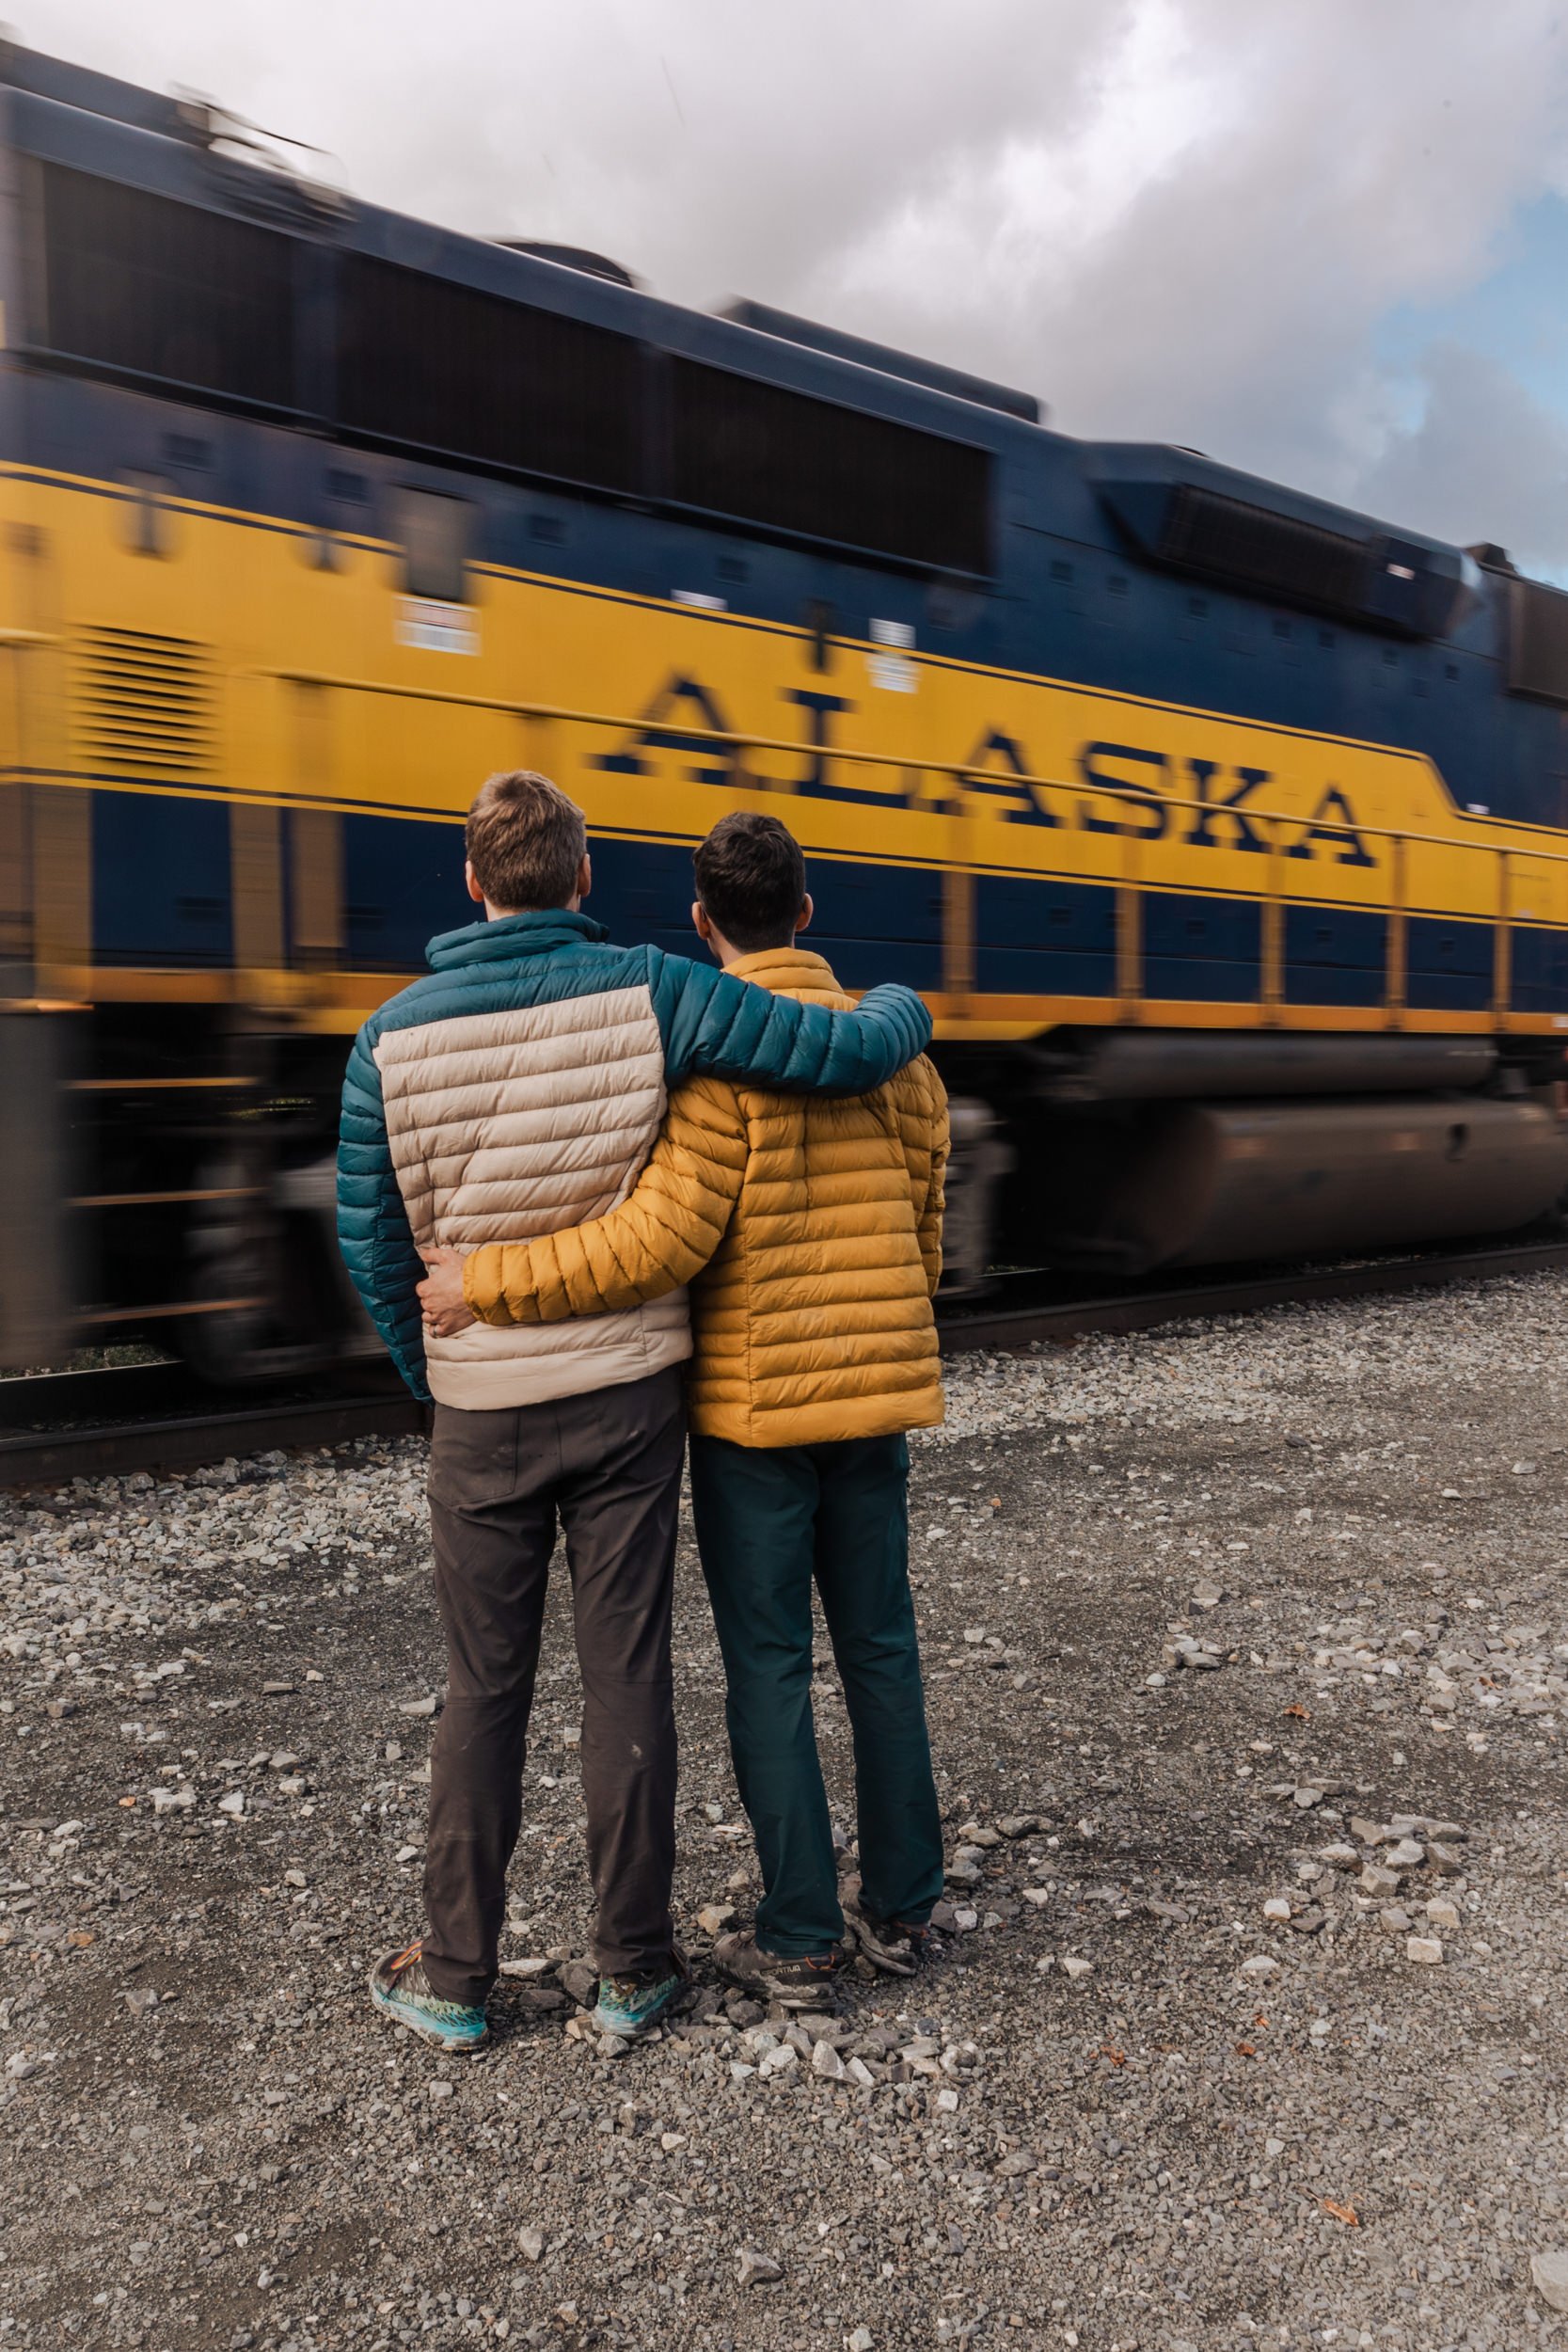 Gay Proposal LGBTQ+ Engagement Photographer in Alaska  | The Hearnes Wedding Photography